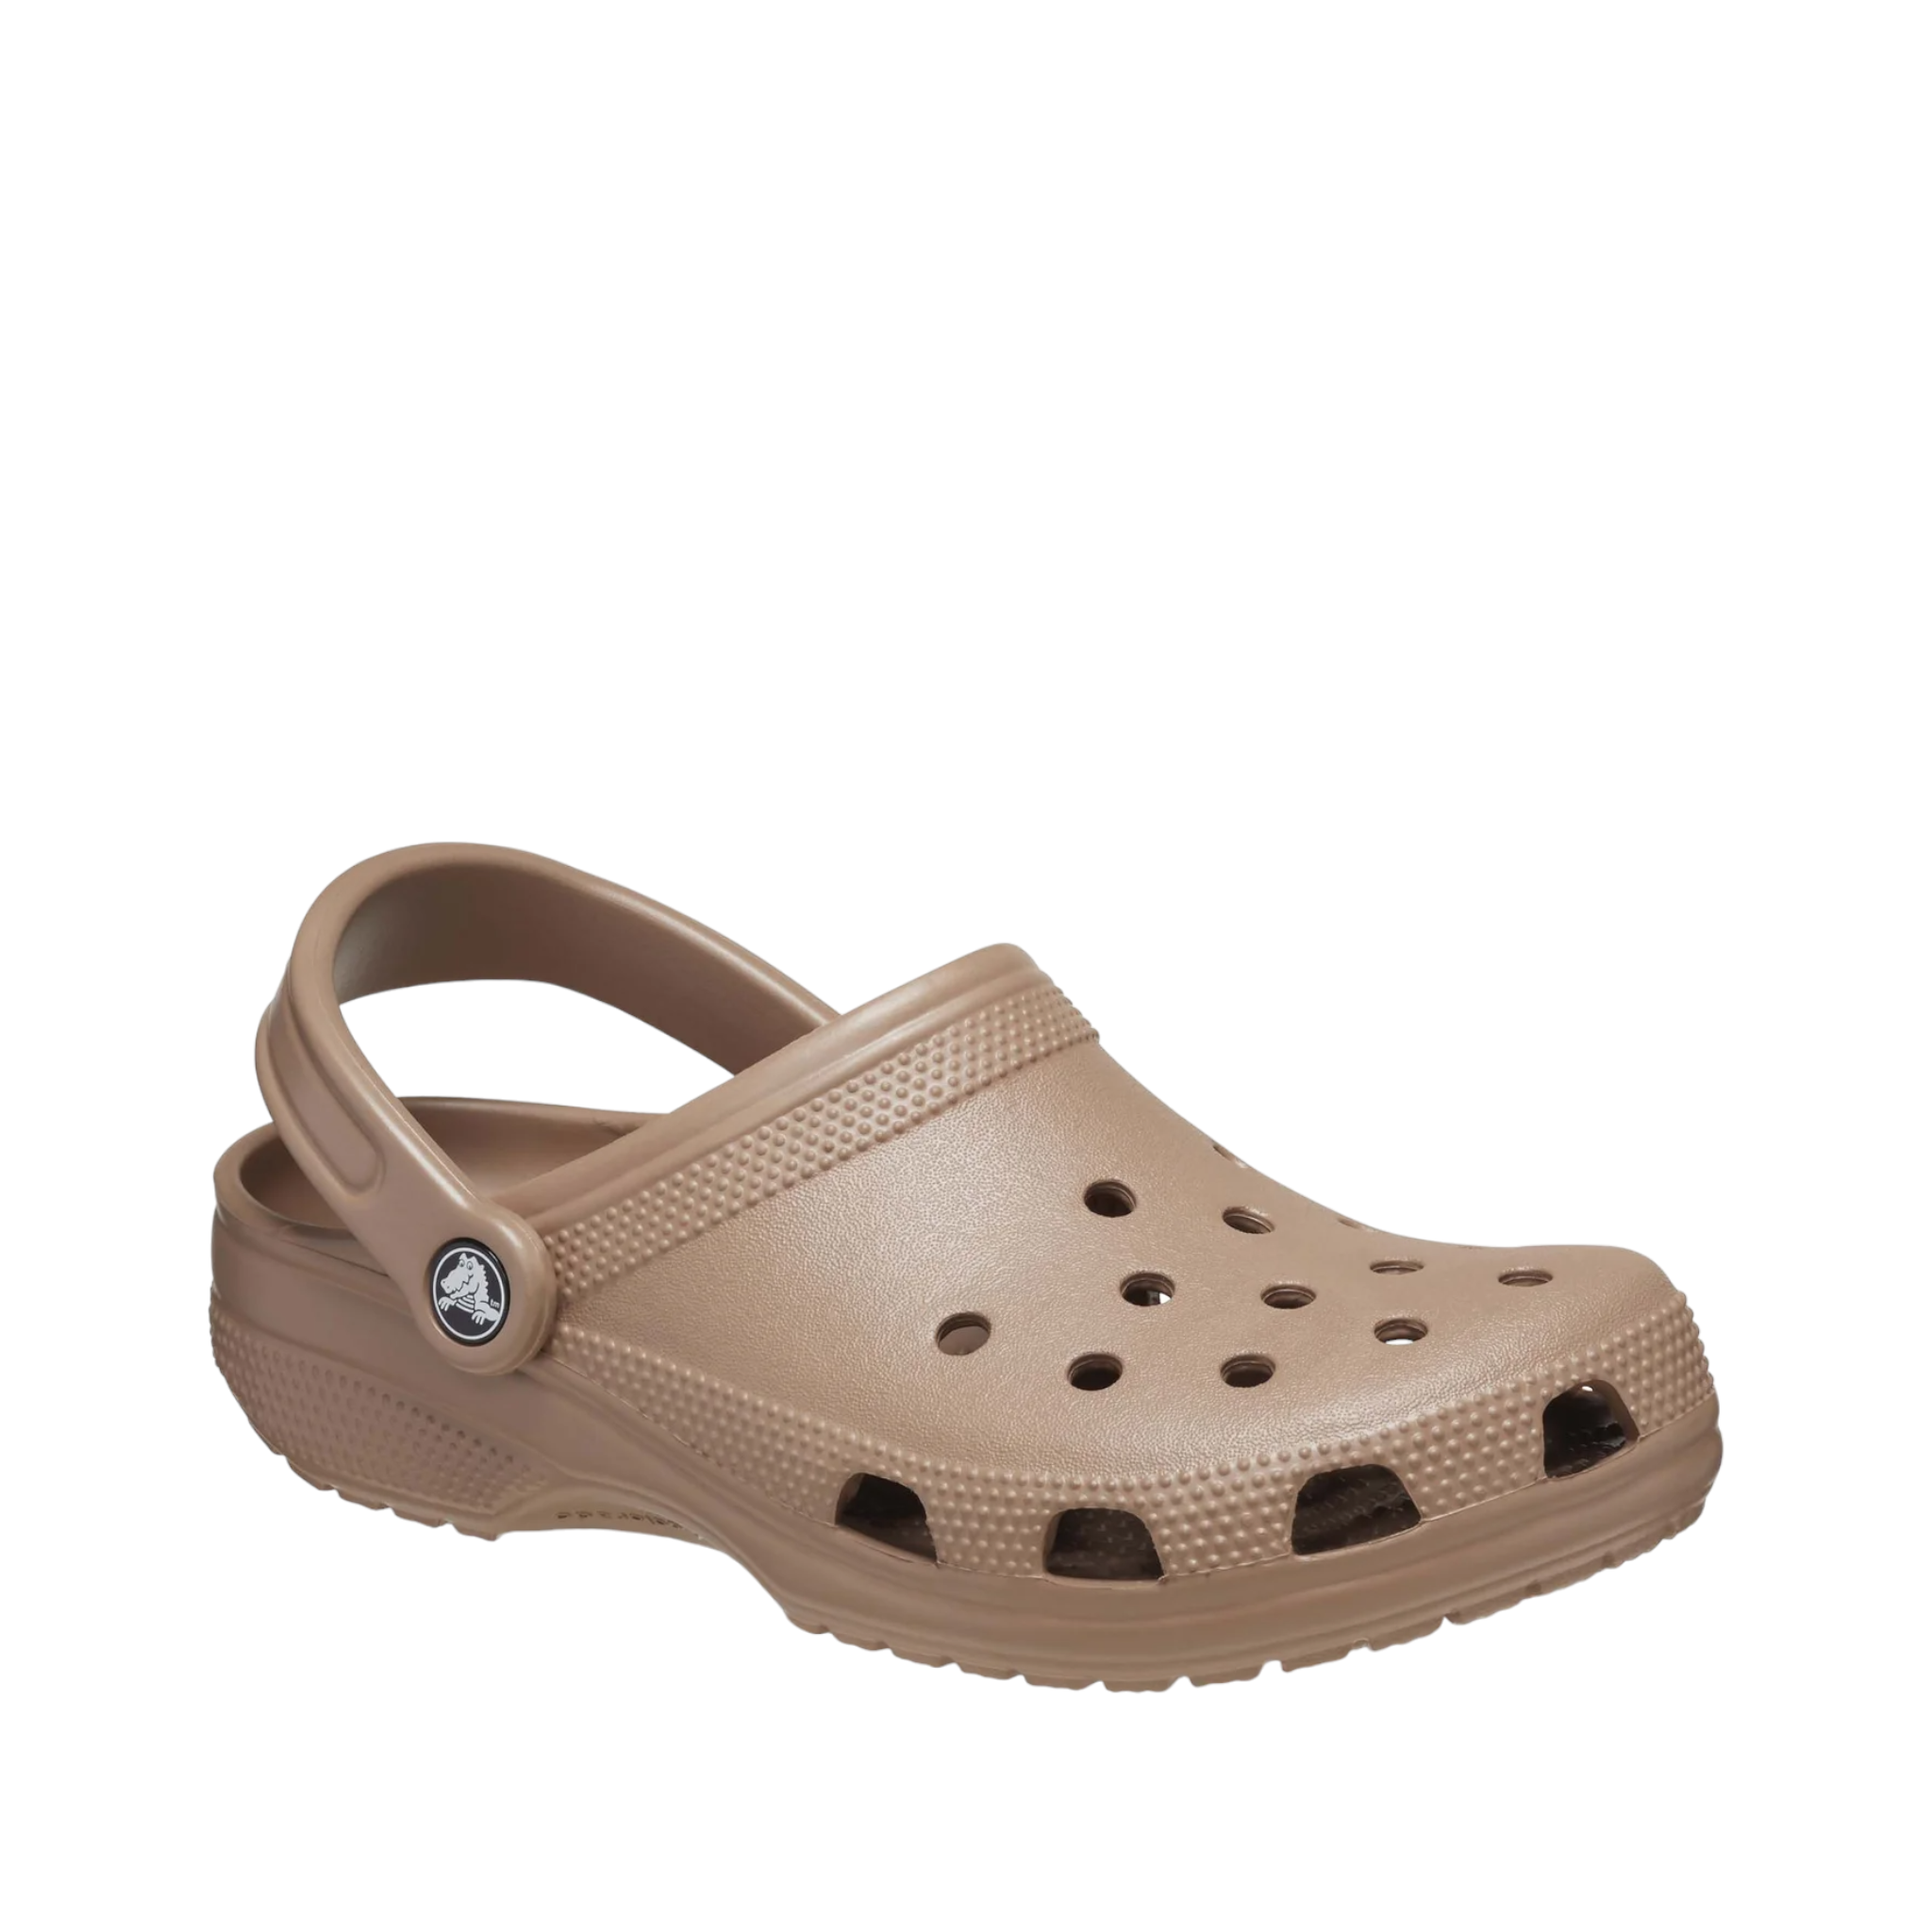 Shop Classic Clog Crocs - with shoe&me - from Crocs - Clogs - Clog, Mens, Summer, Winter, Womens